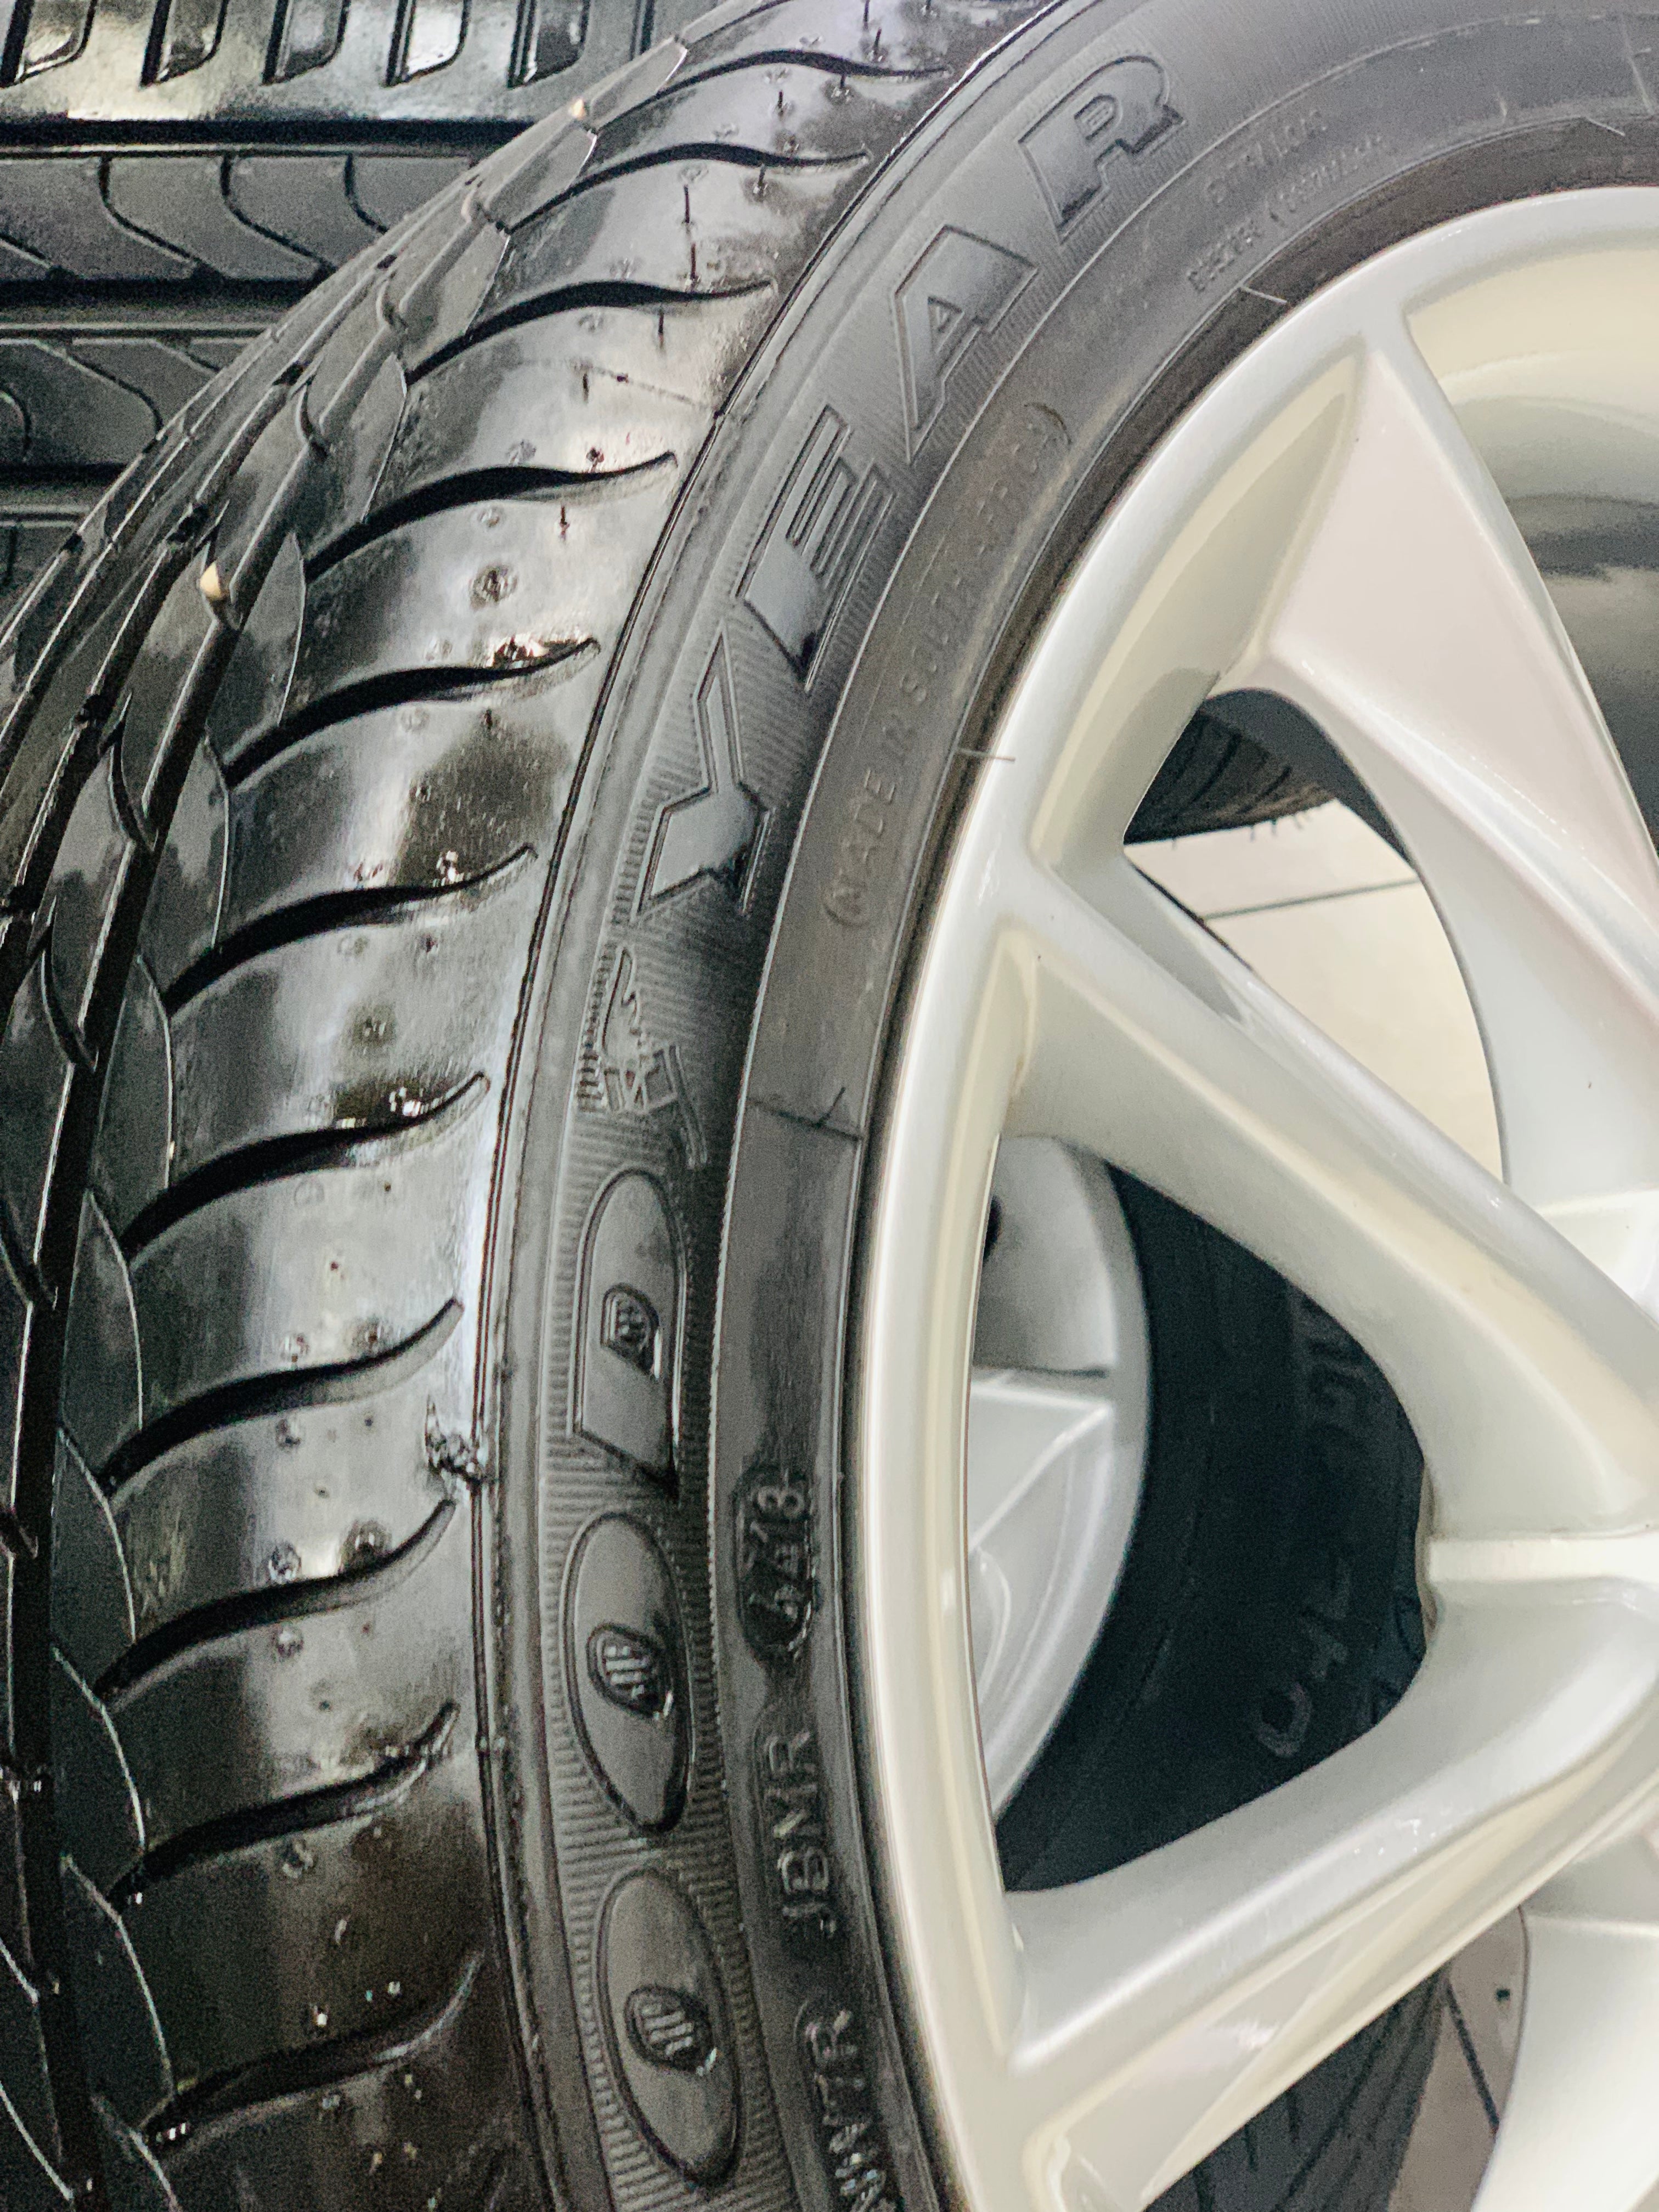 17” OEM AUDI 5/112 pre owned mags & tyres